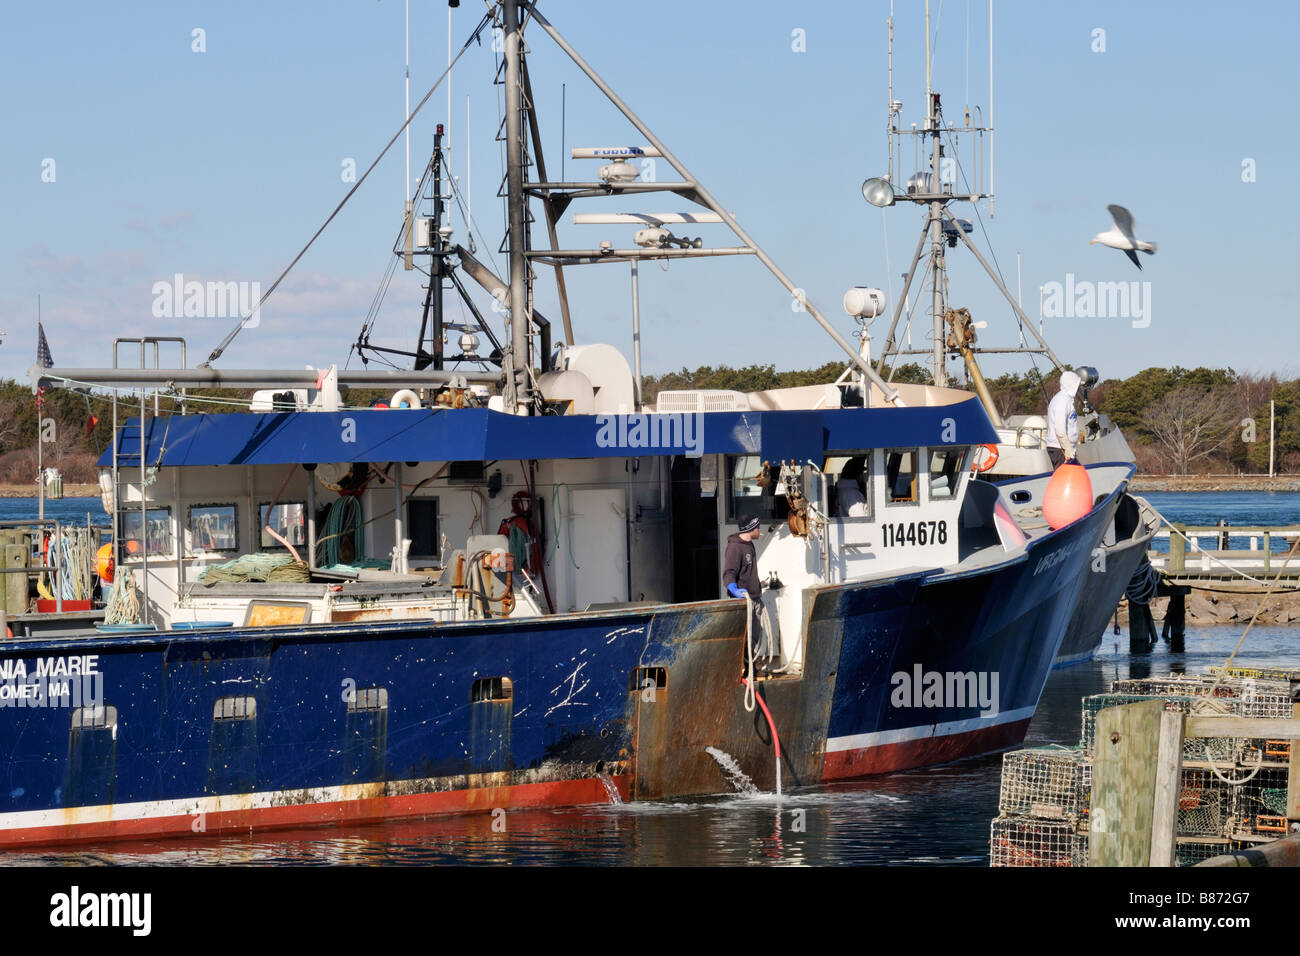 Casco azul barco pesquero preparando para atracar en el muelle de pescadores líneas manning Foto de stock